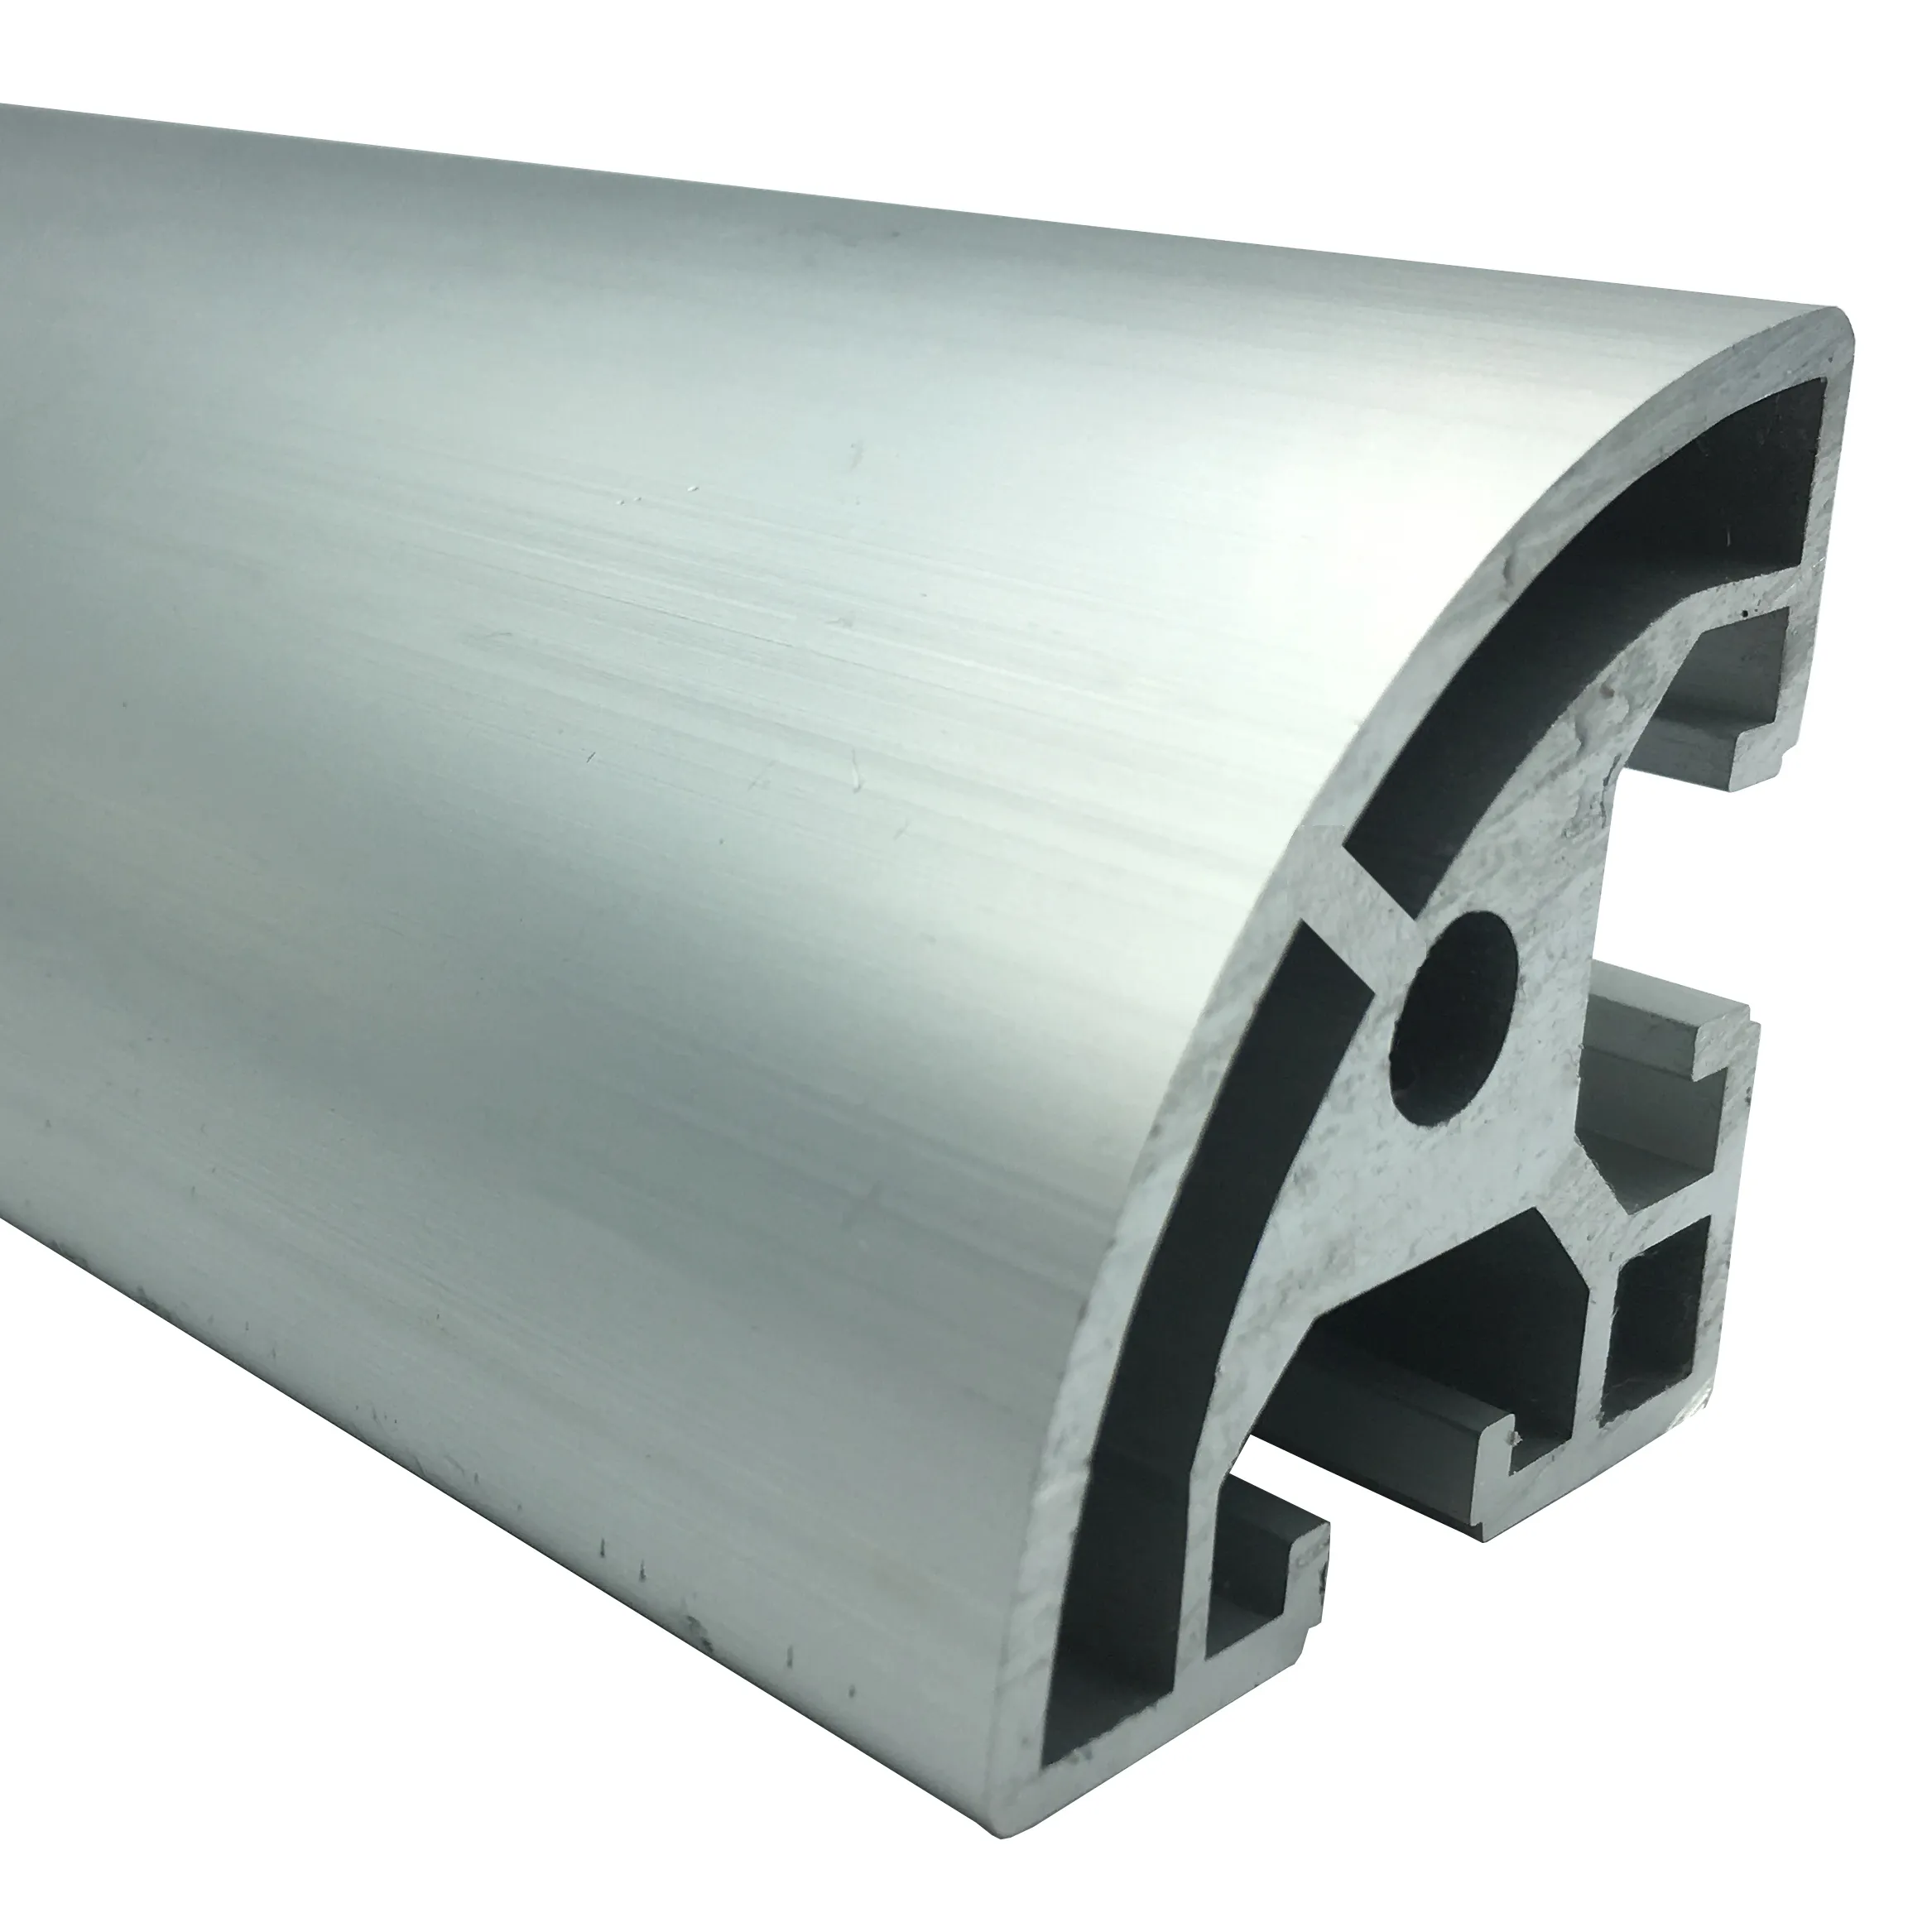 Sonder angebot Quadrant Shape T Slot 4040 Aluminium profil Extrudiertes Aluminium 4040 Aluminium Extrusion 4040 Für Industries ysteme